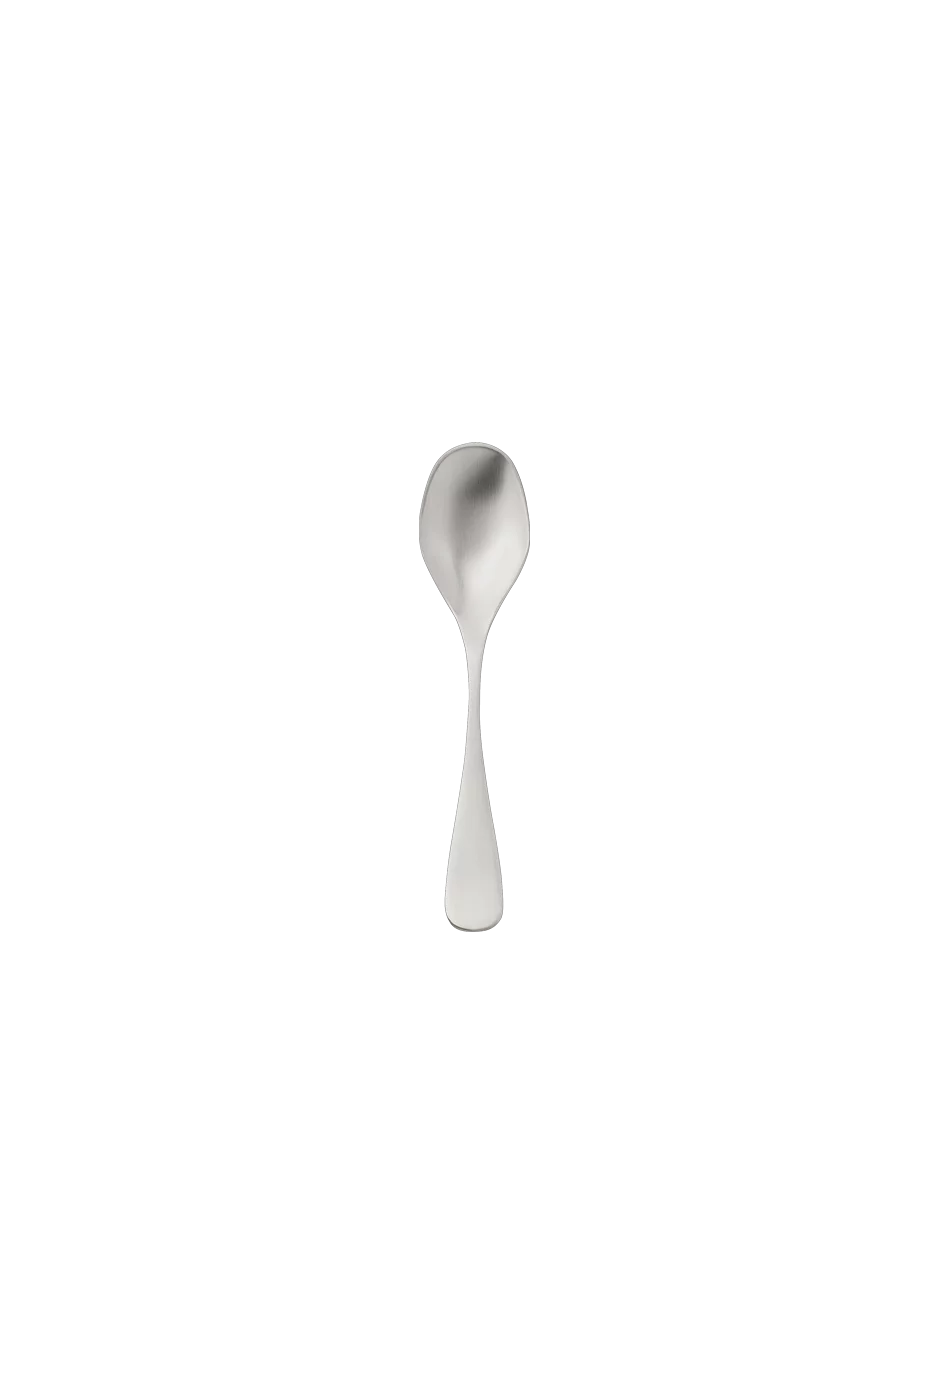 Scandia Mocha Spoon 10,5 Cm (18/8 stainless steel)